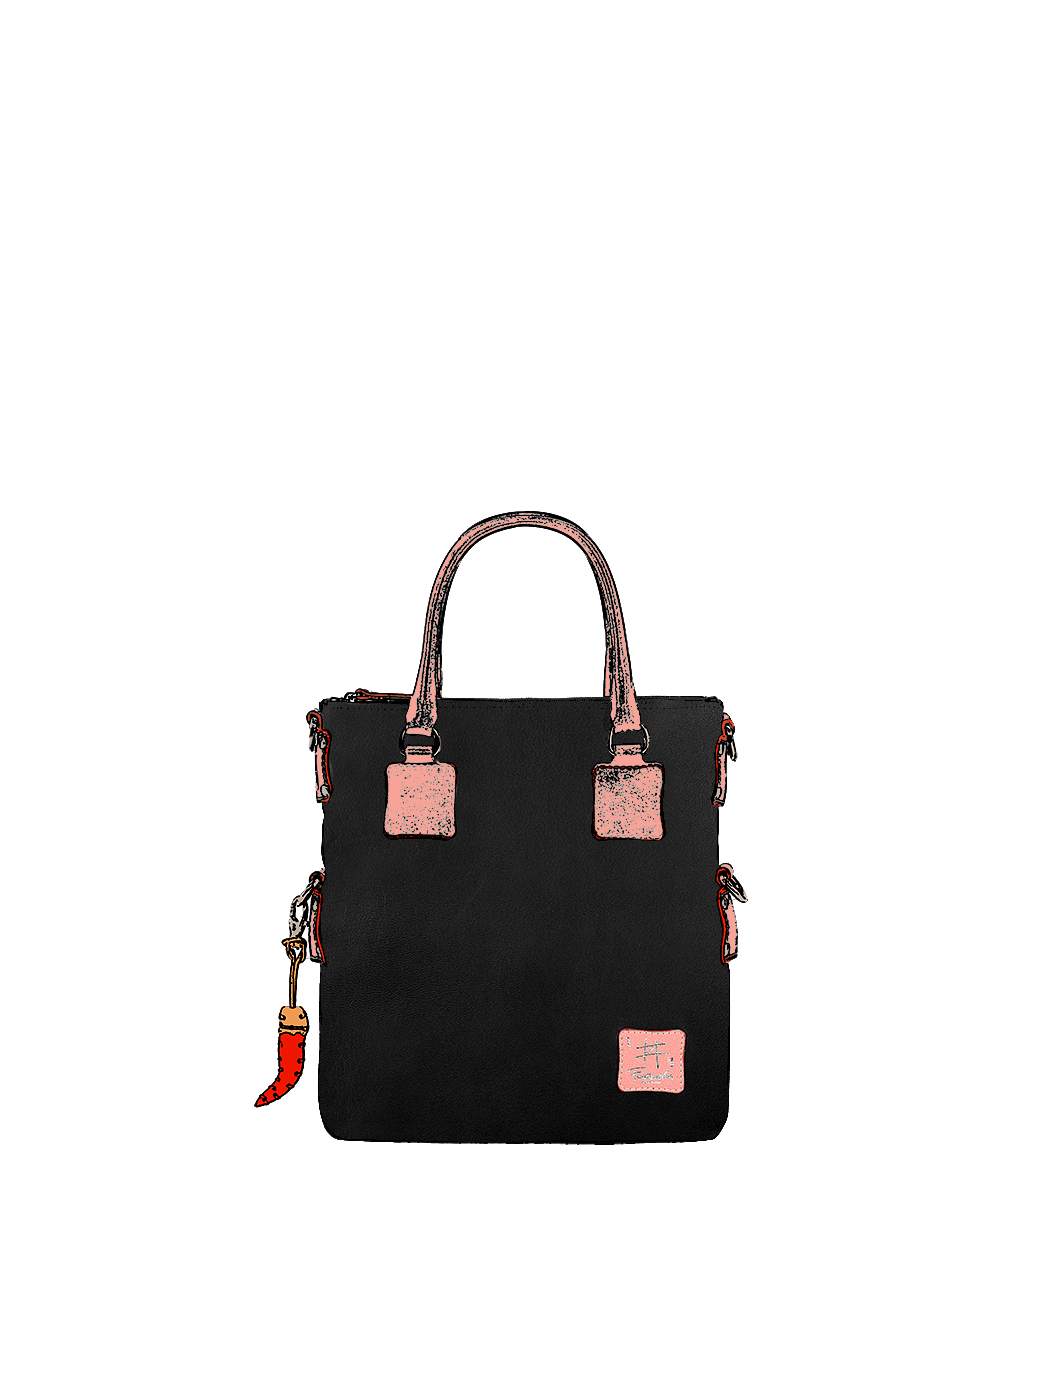 Small Leather Tote Handbag, Solid Color Black